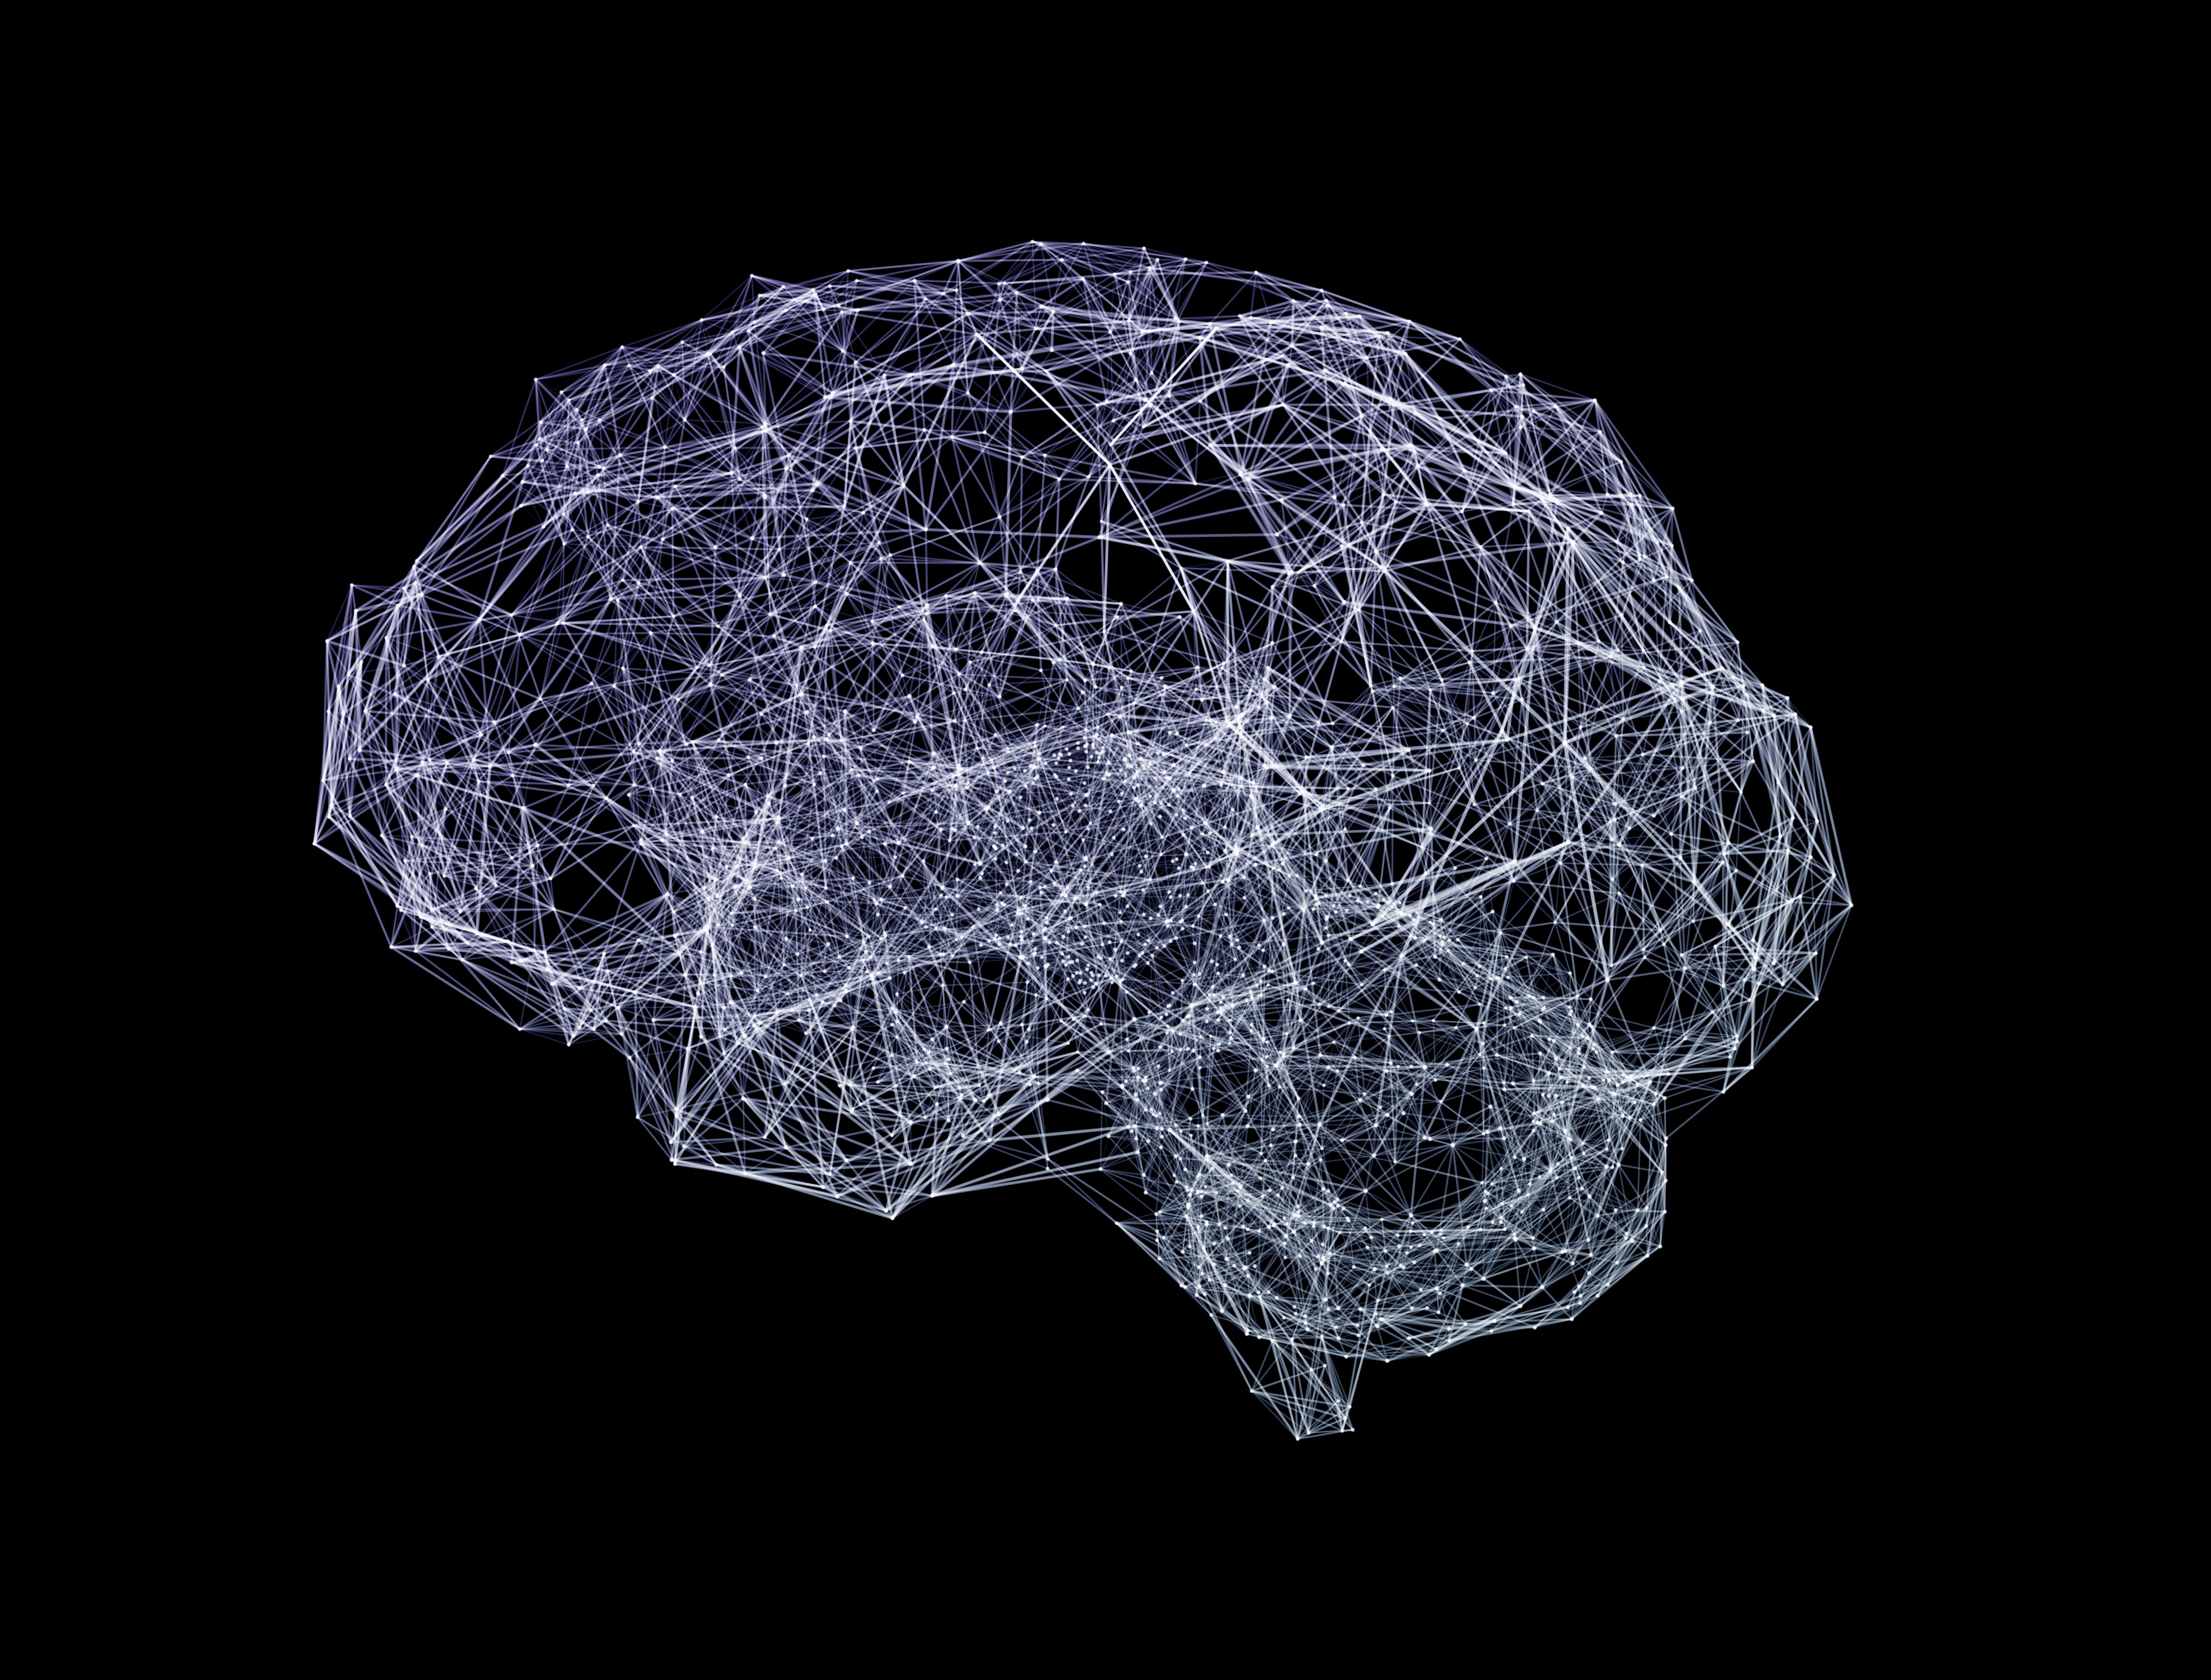 Brain network